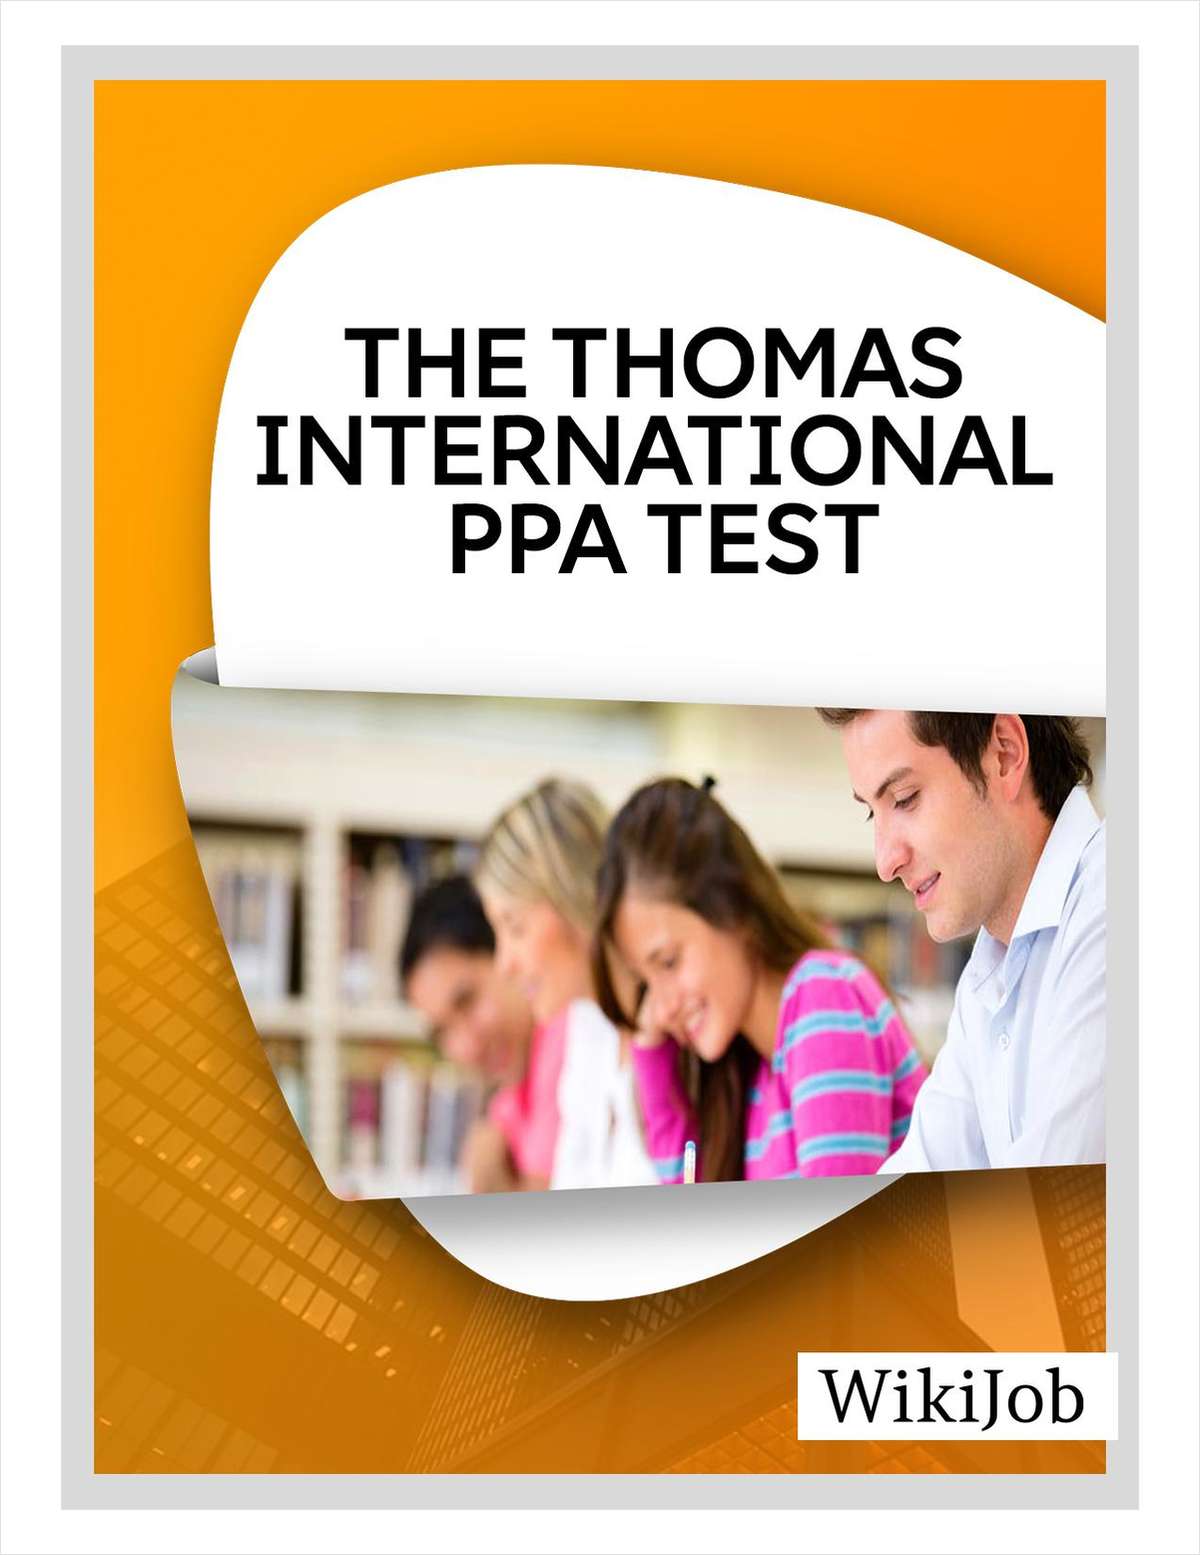 The Thomas International PPA Test